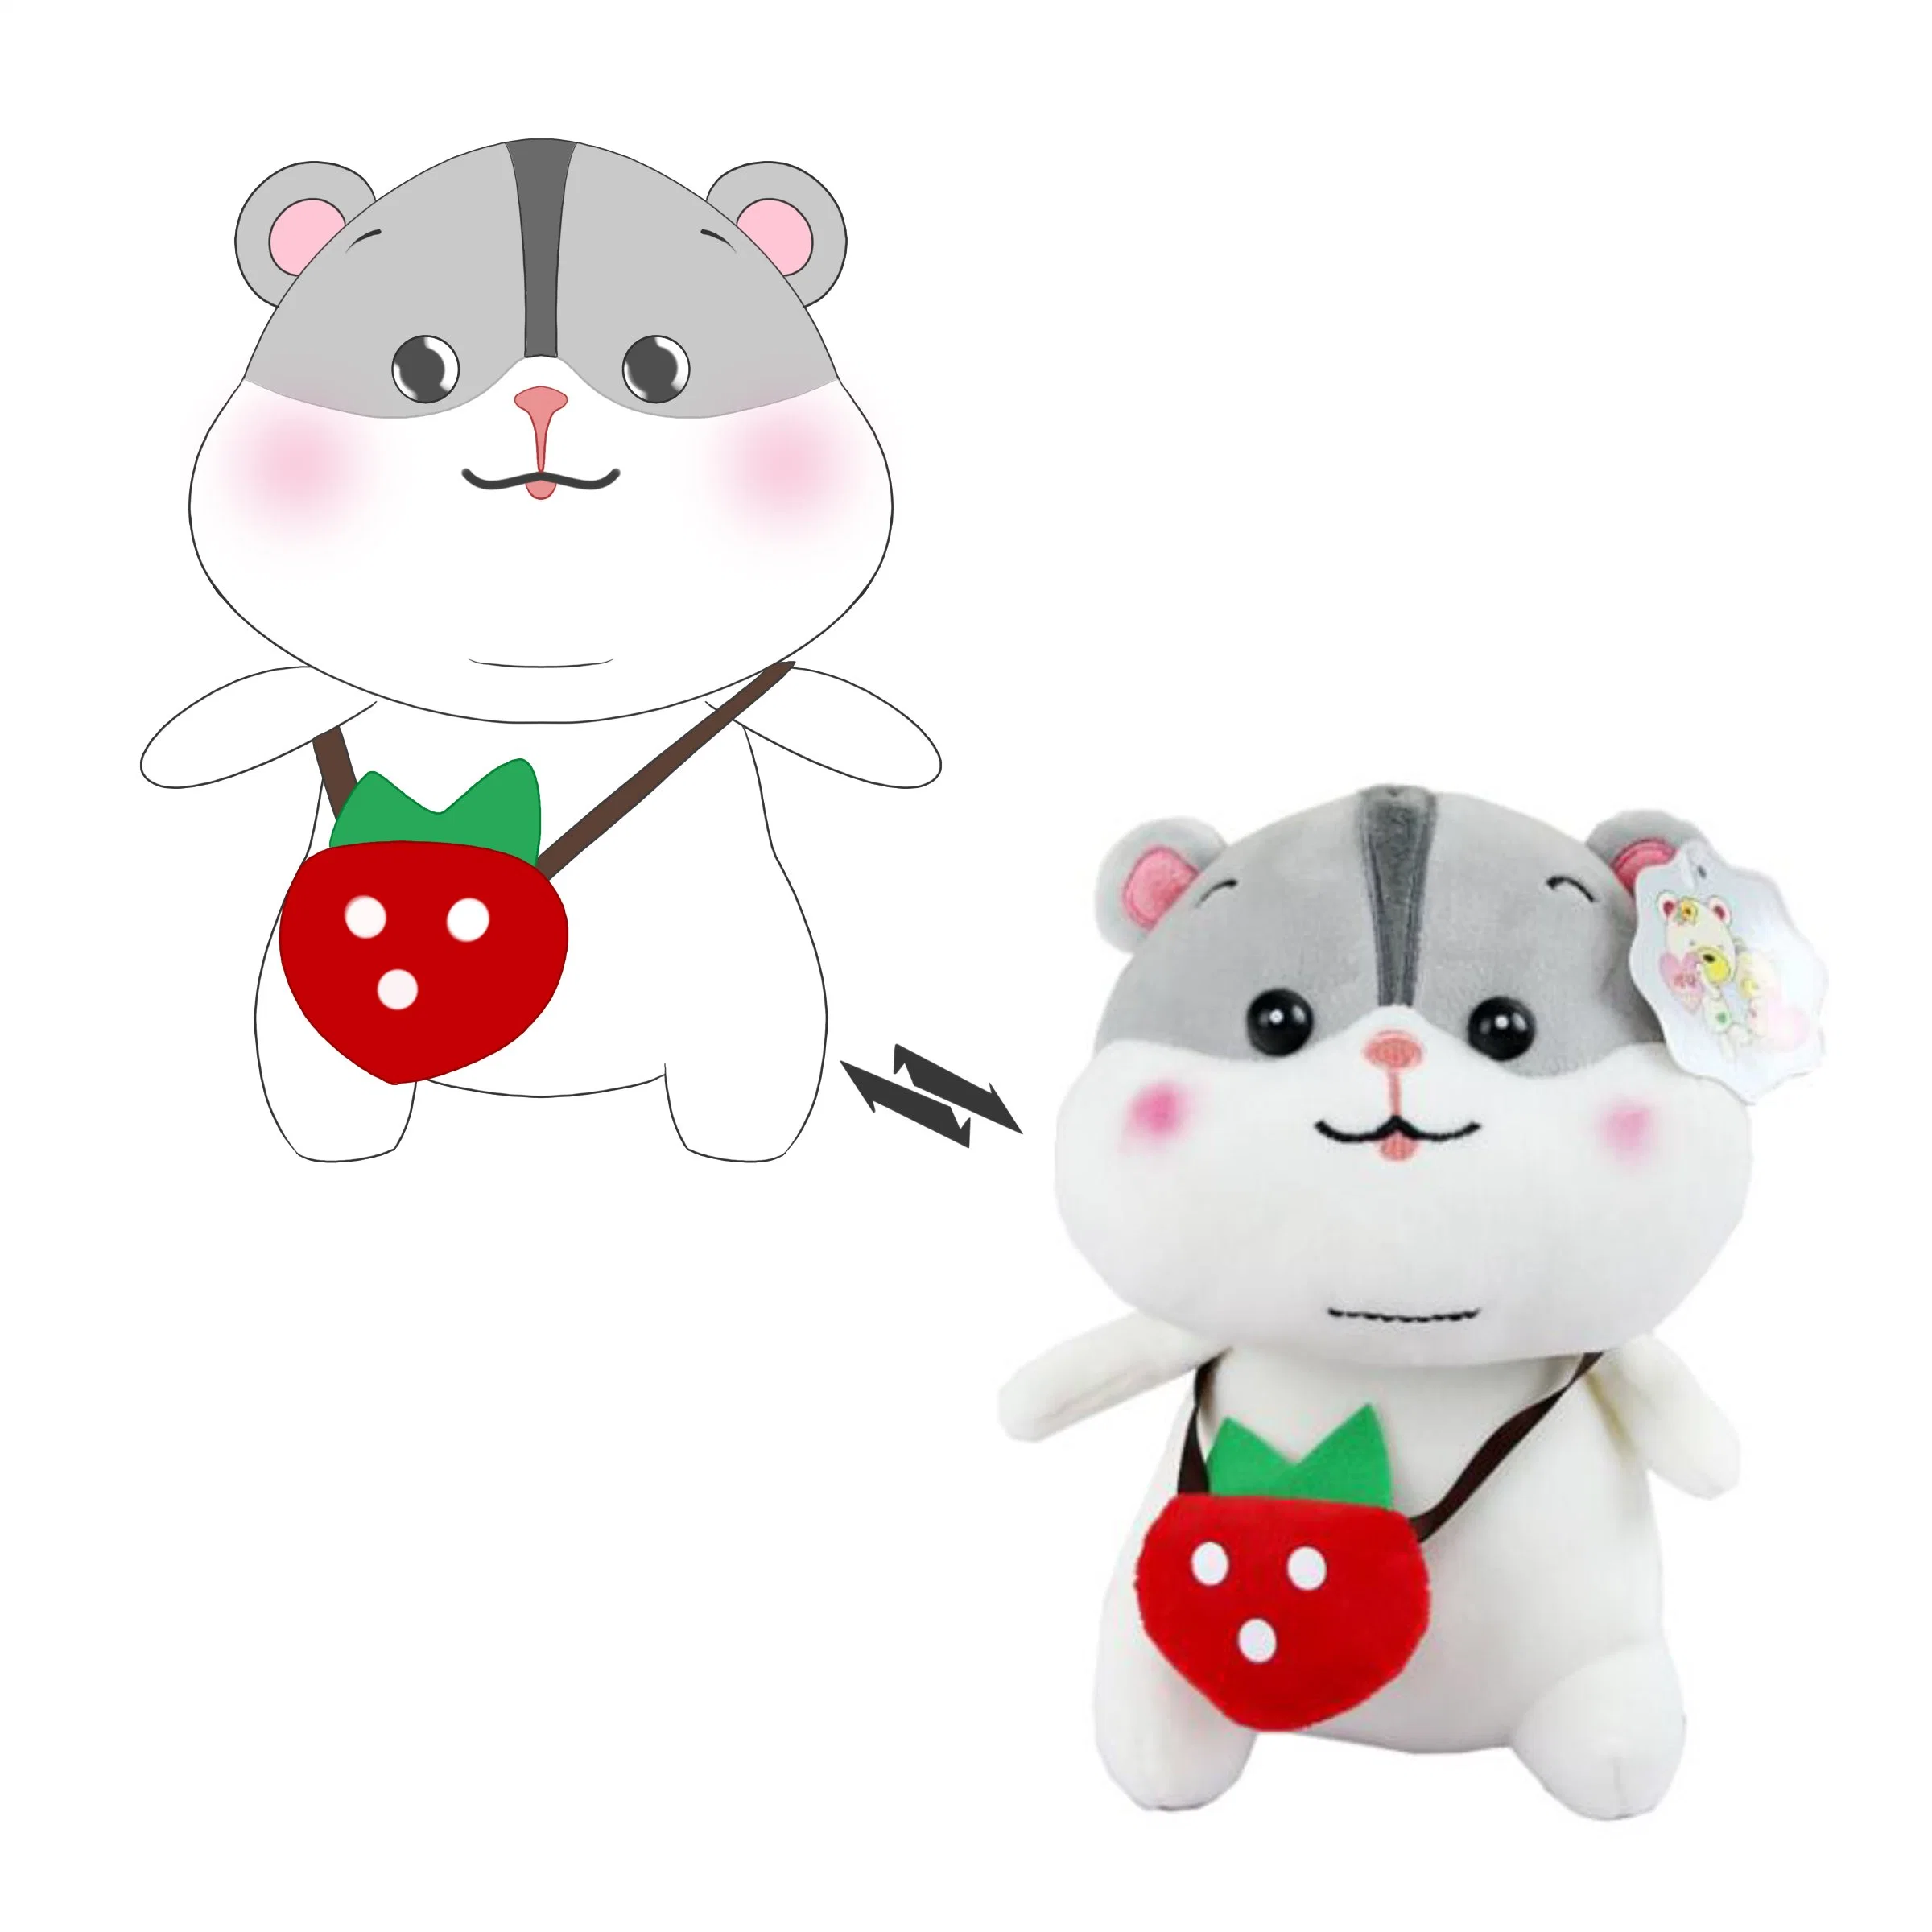 China Factory Custom Plush Toy Stuffed Animal Cute Mascot Promotional Gift